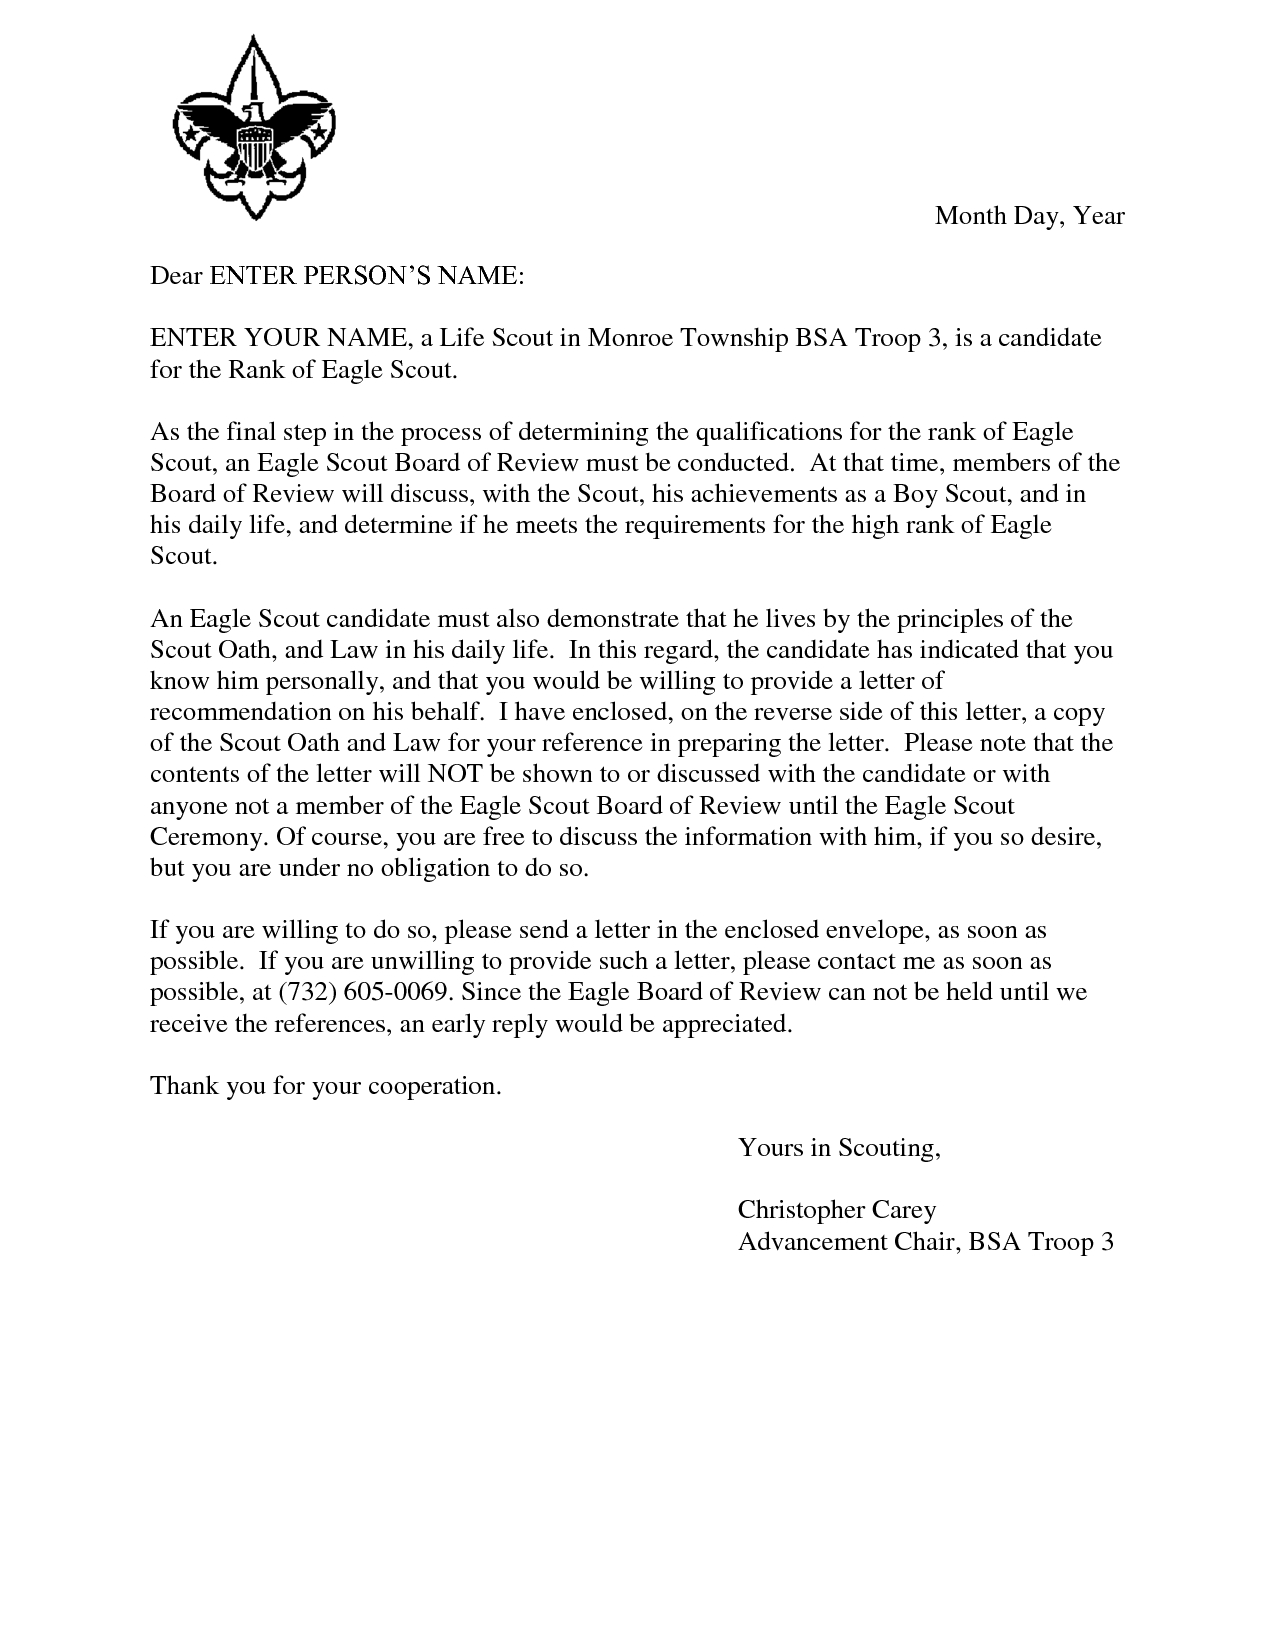 Eagle Scout Recommendation Letter Template